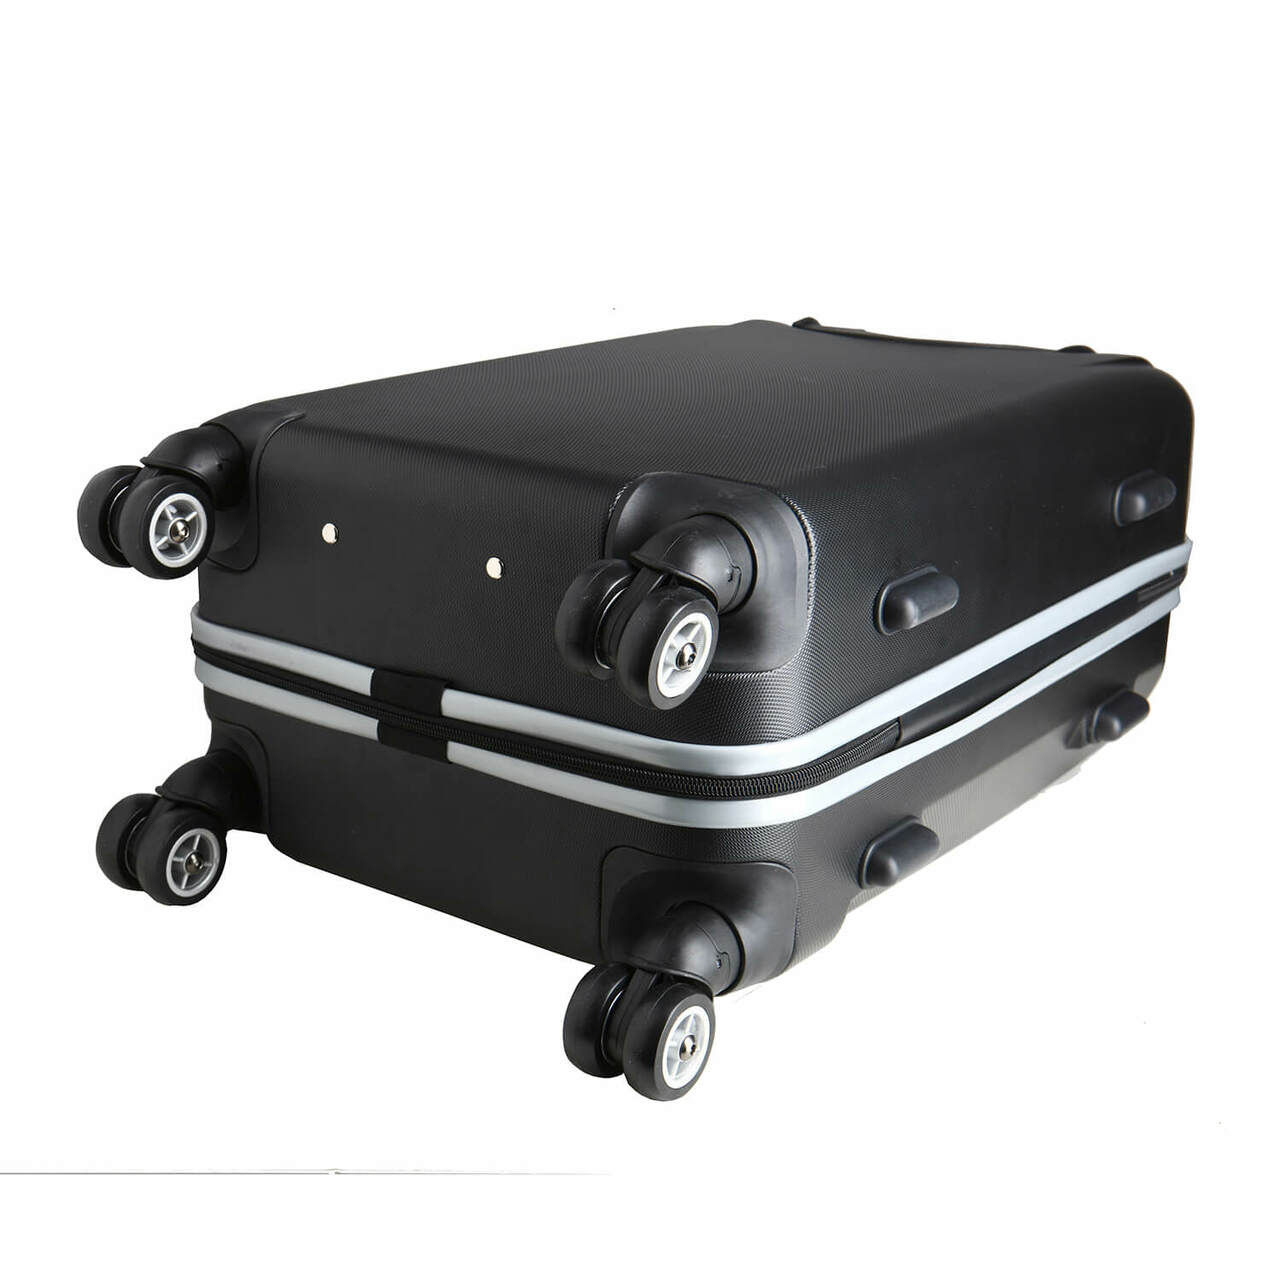 North Dakota State 20" Hardcase Luggage Carry-on Spinner